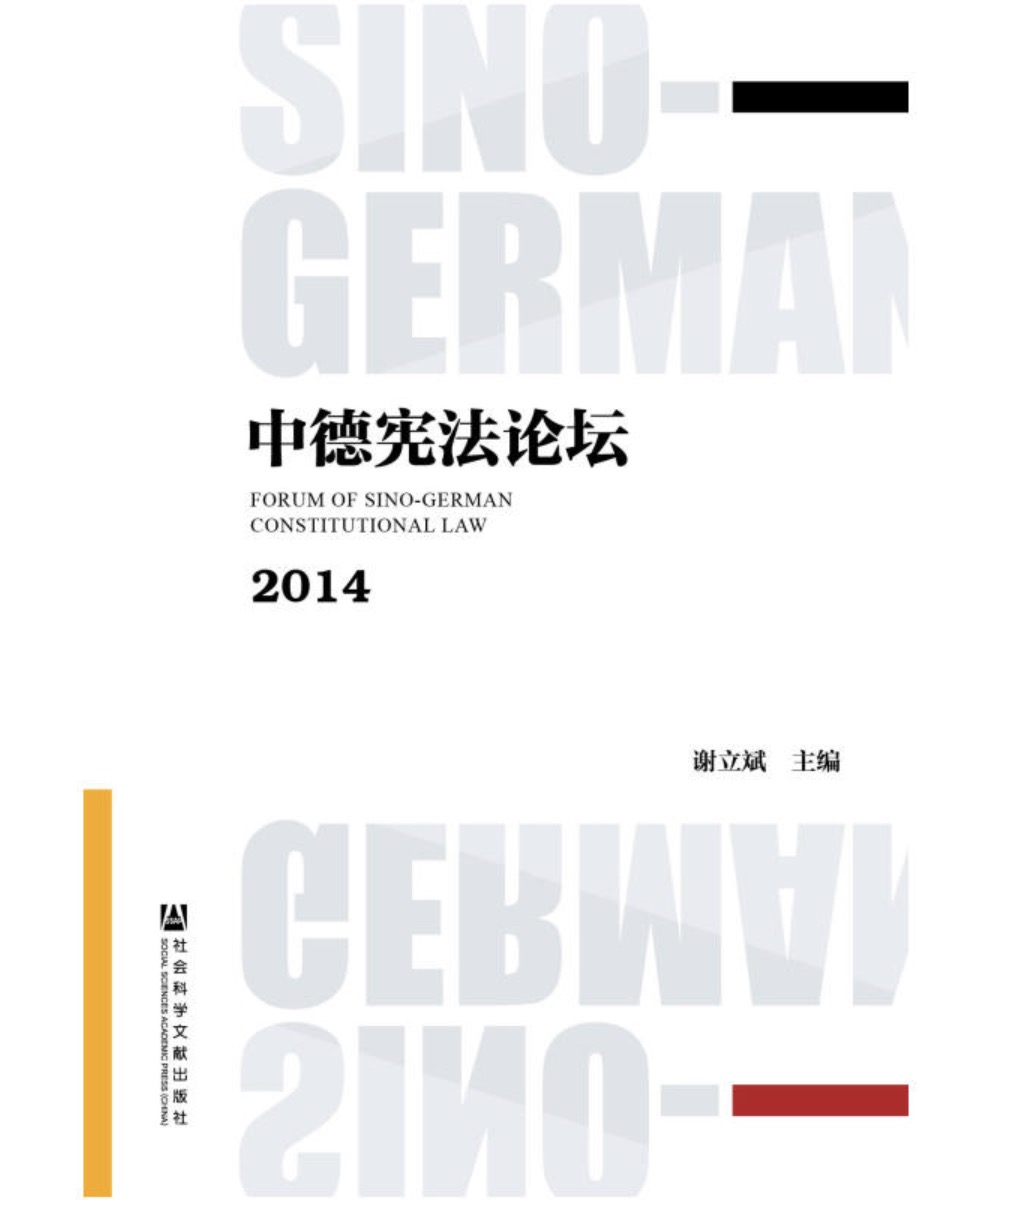 中德憲法論壇2014